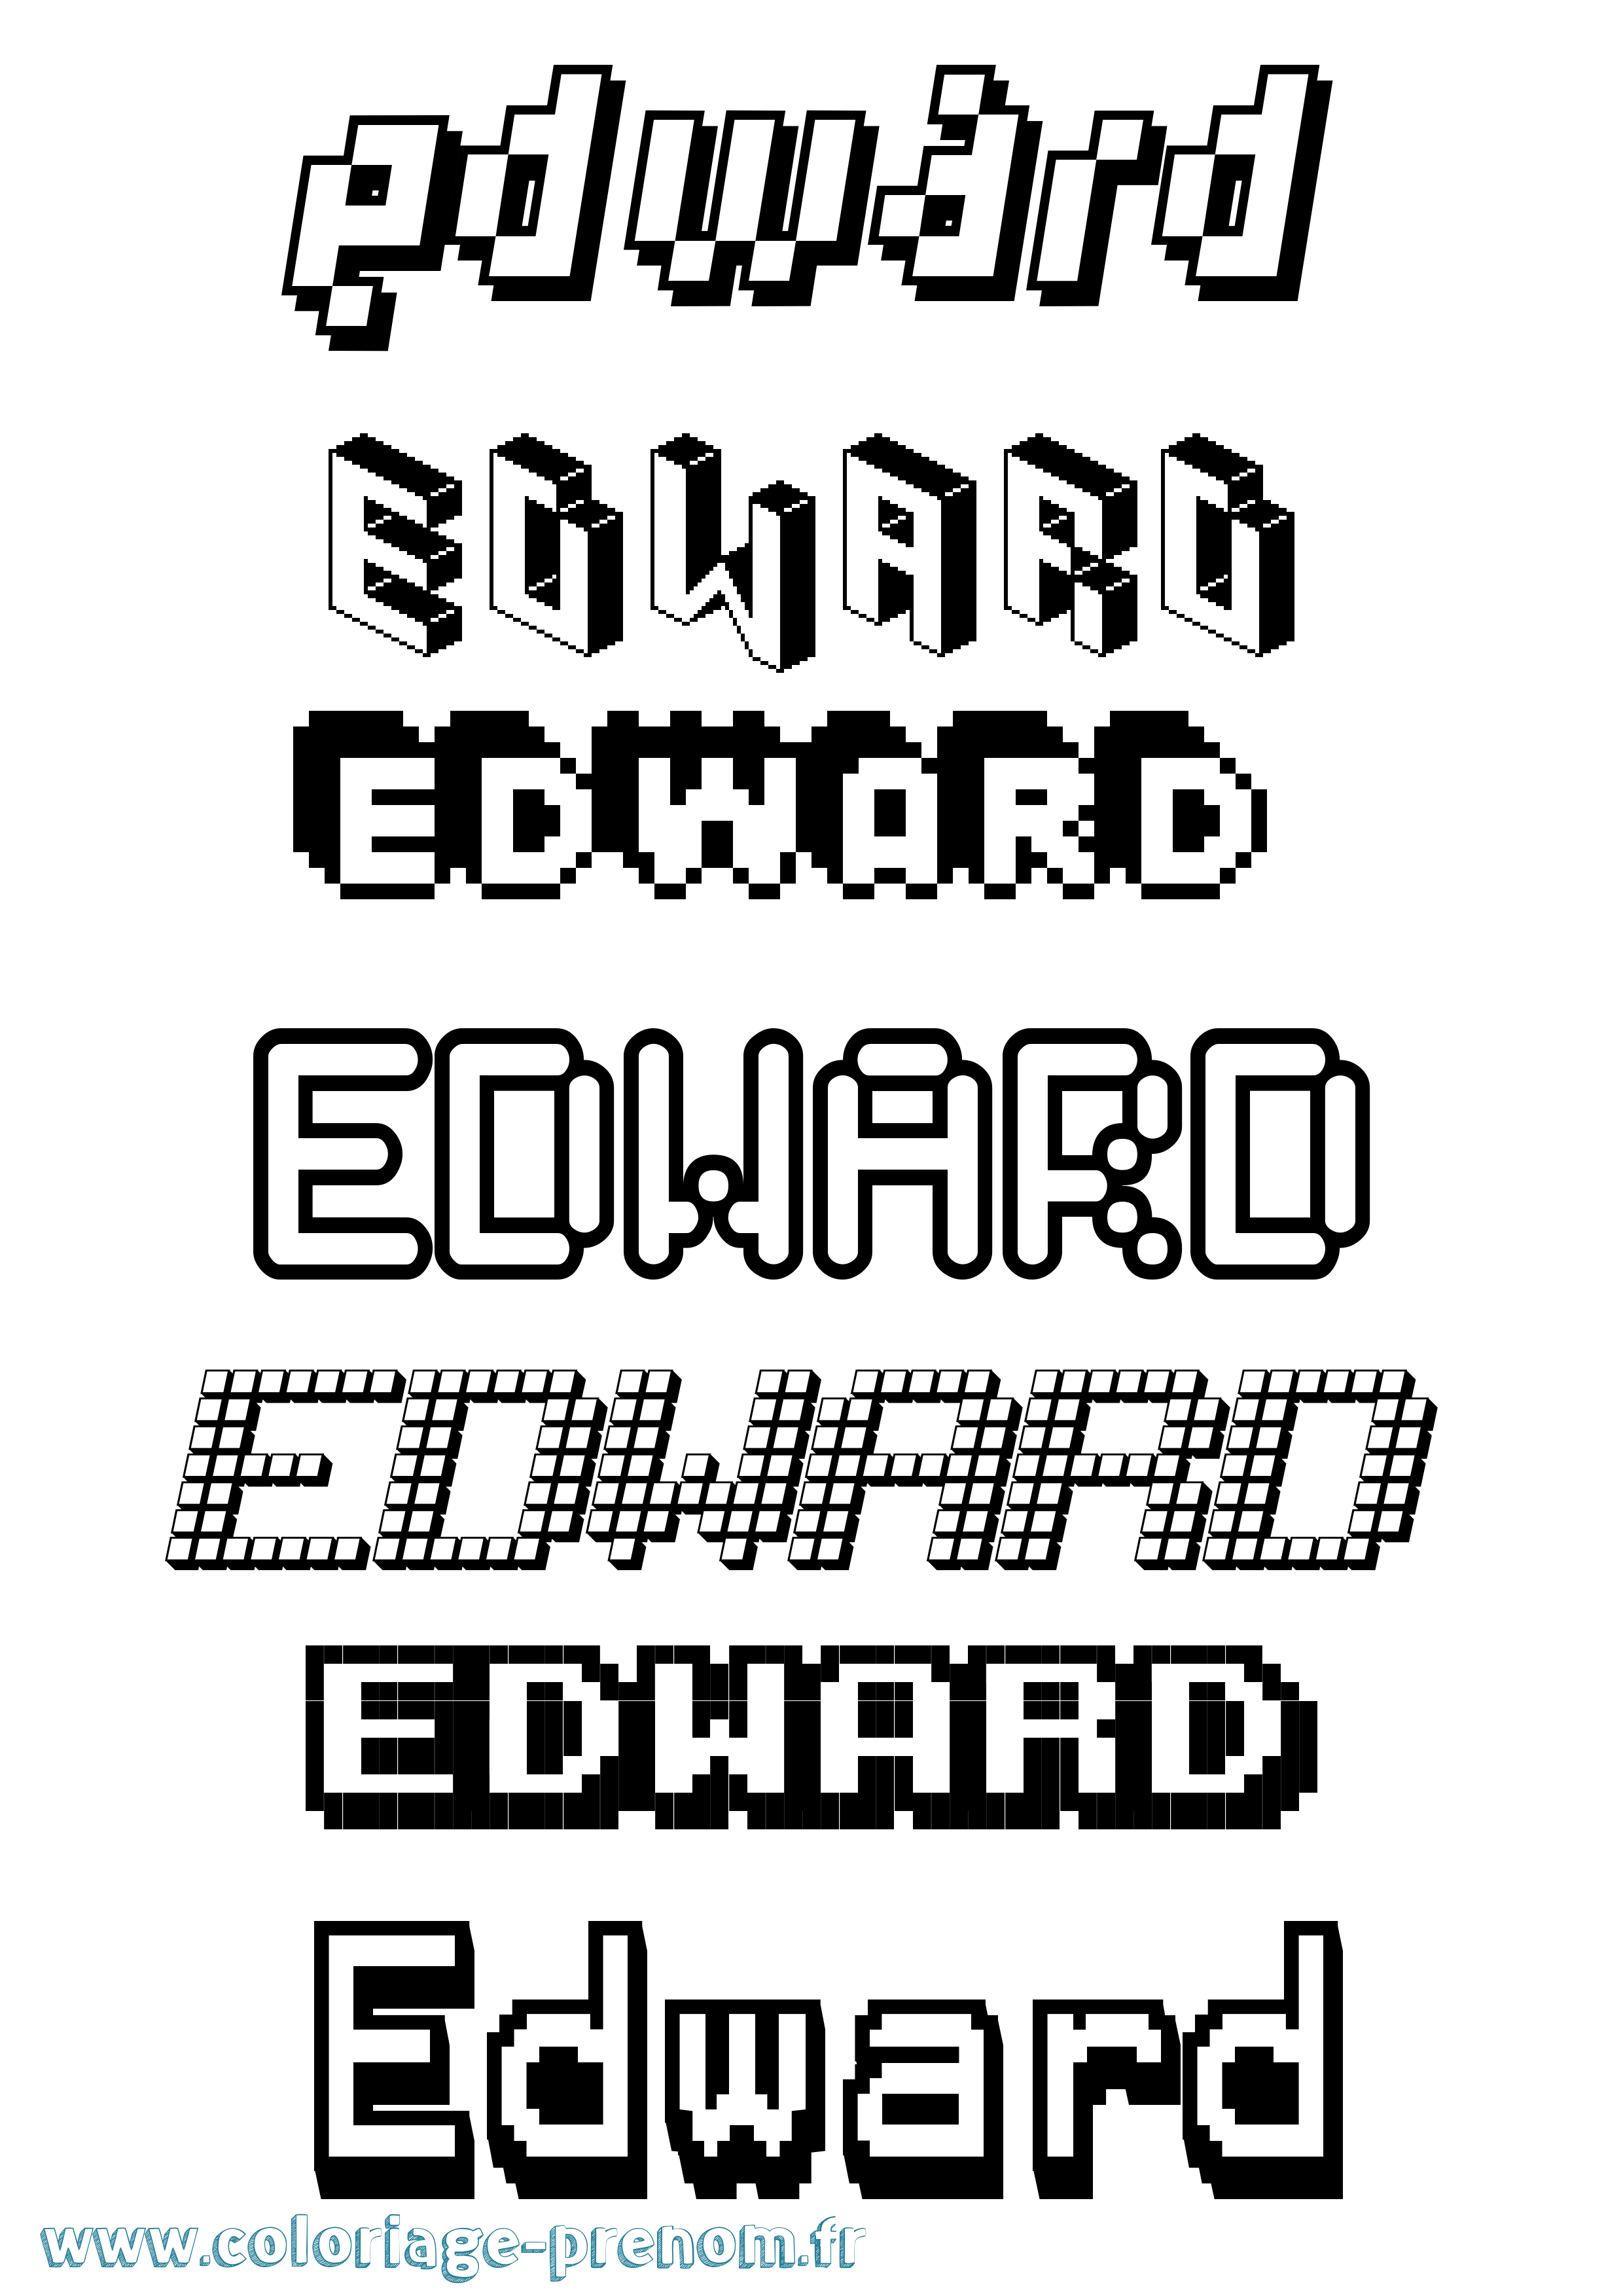 Coloriage prénom Edward Pixel